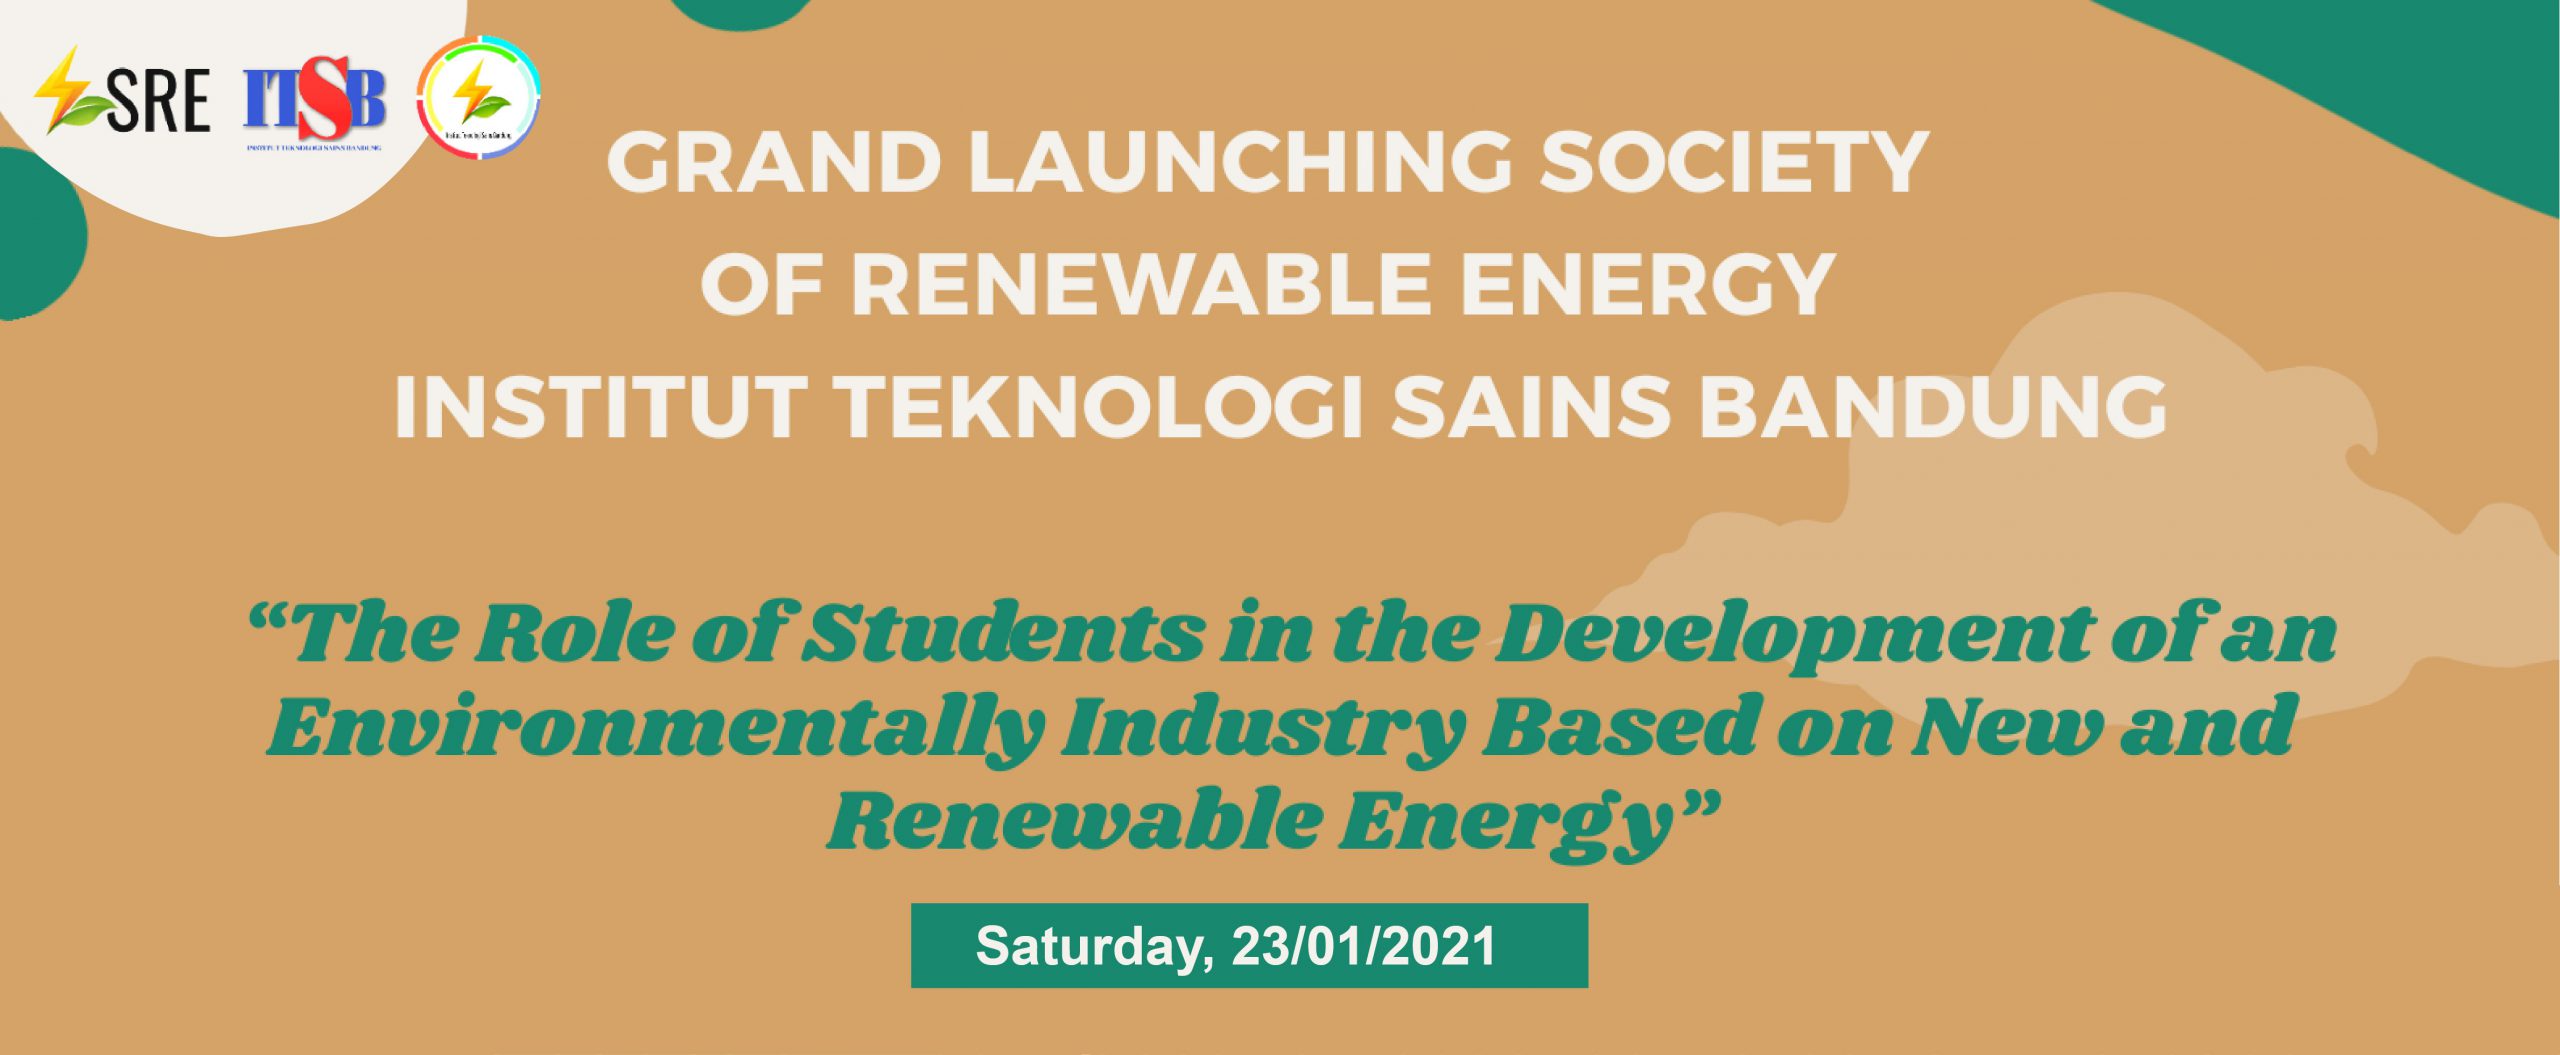 Grand Launching Society of Renewable Energy Institut Teknologi Sains Bandung